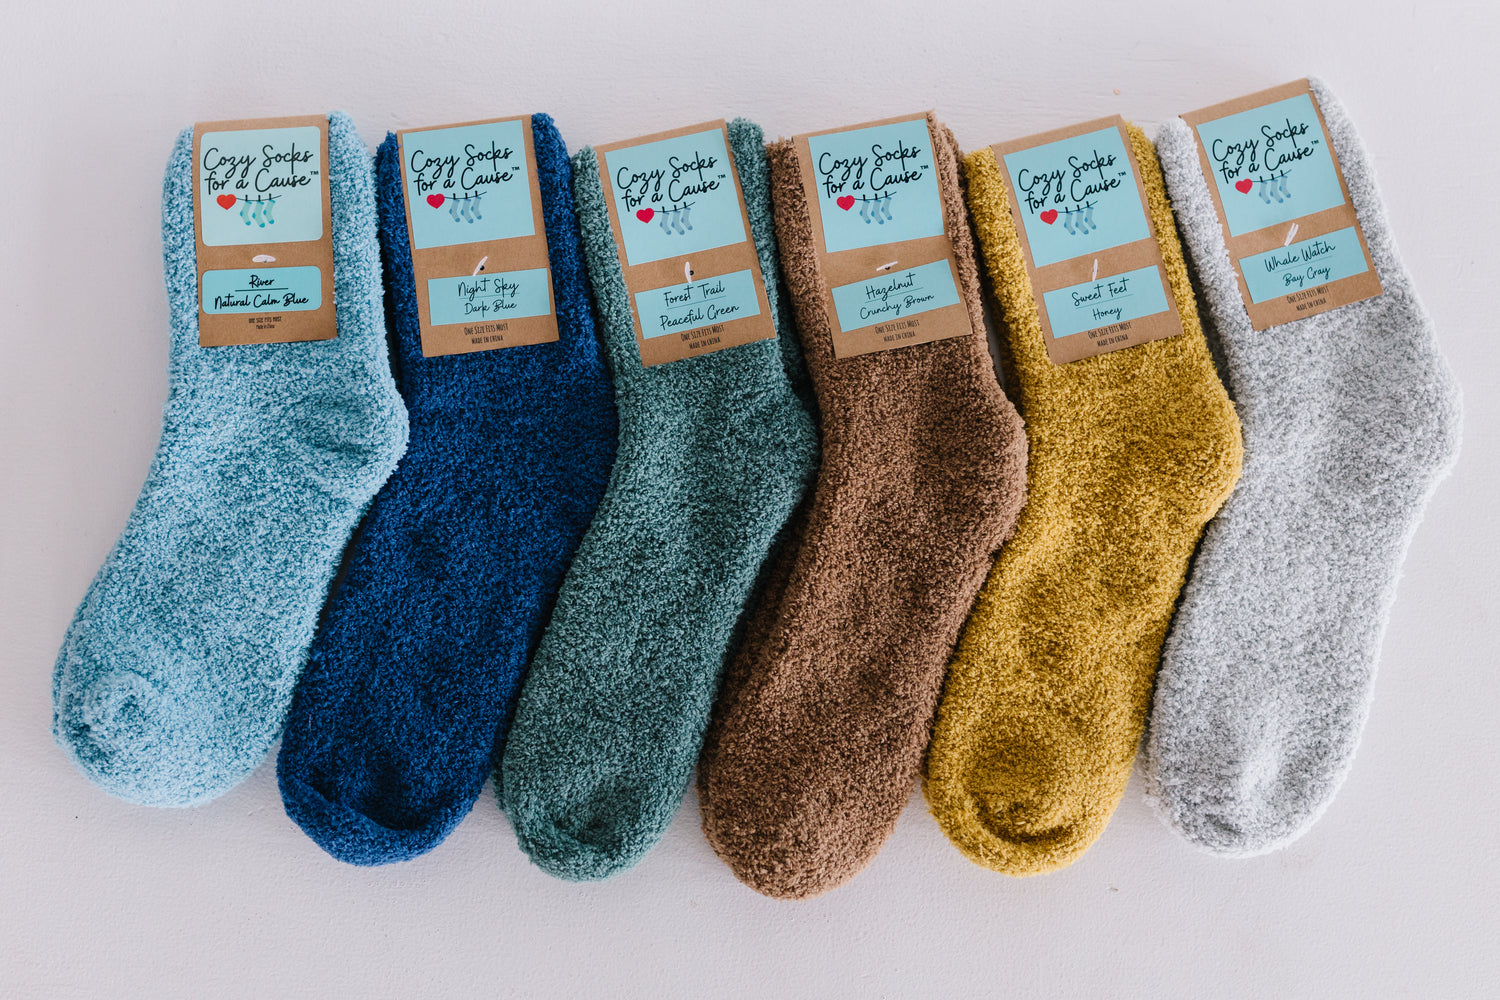 Grippy Socks Bundle – The Cozy Warrior Nonprofit